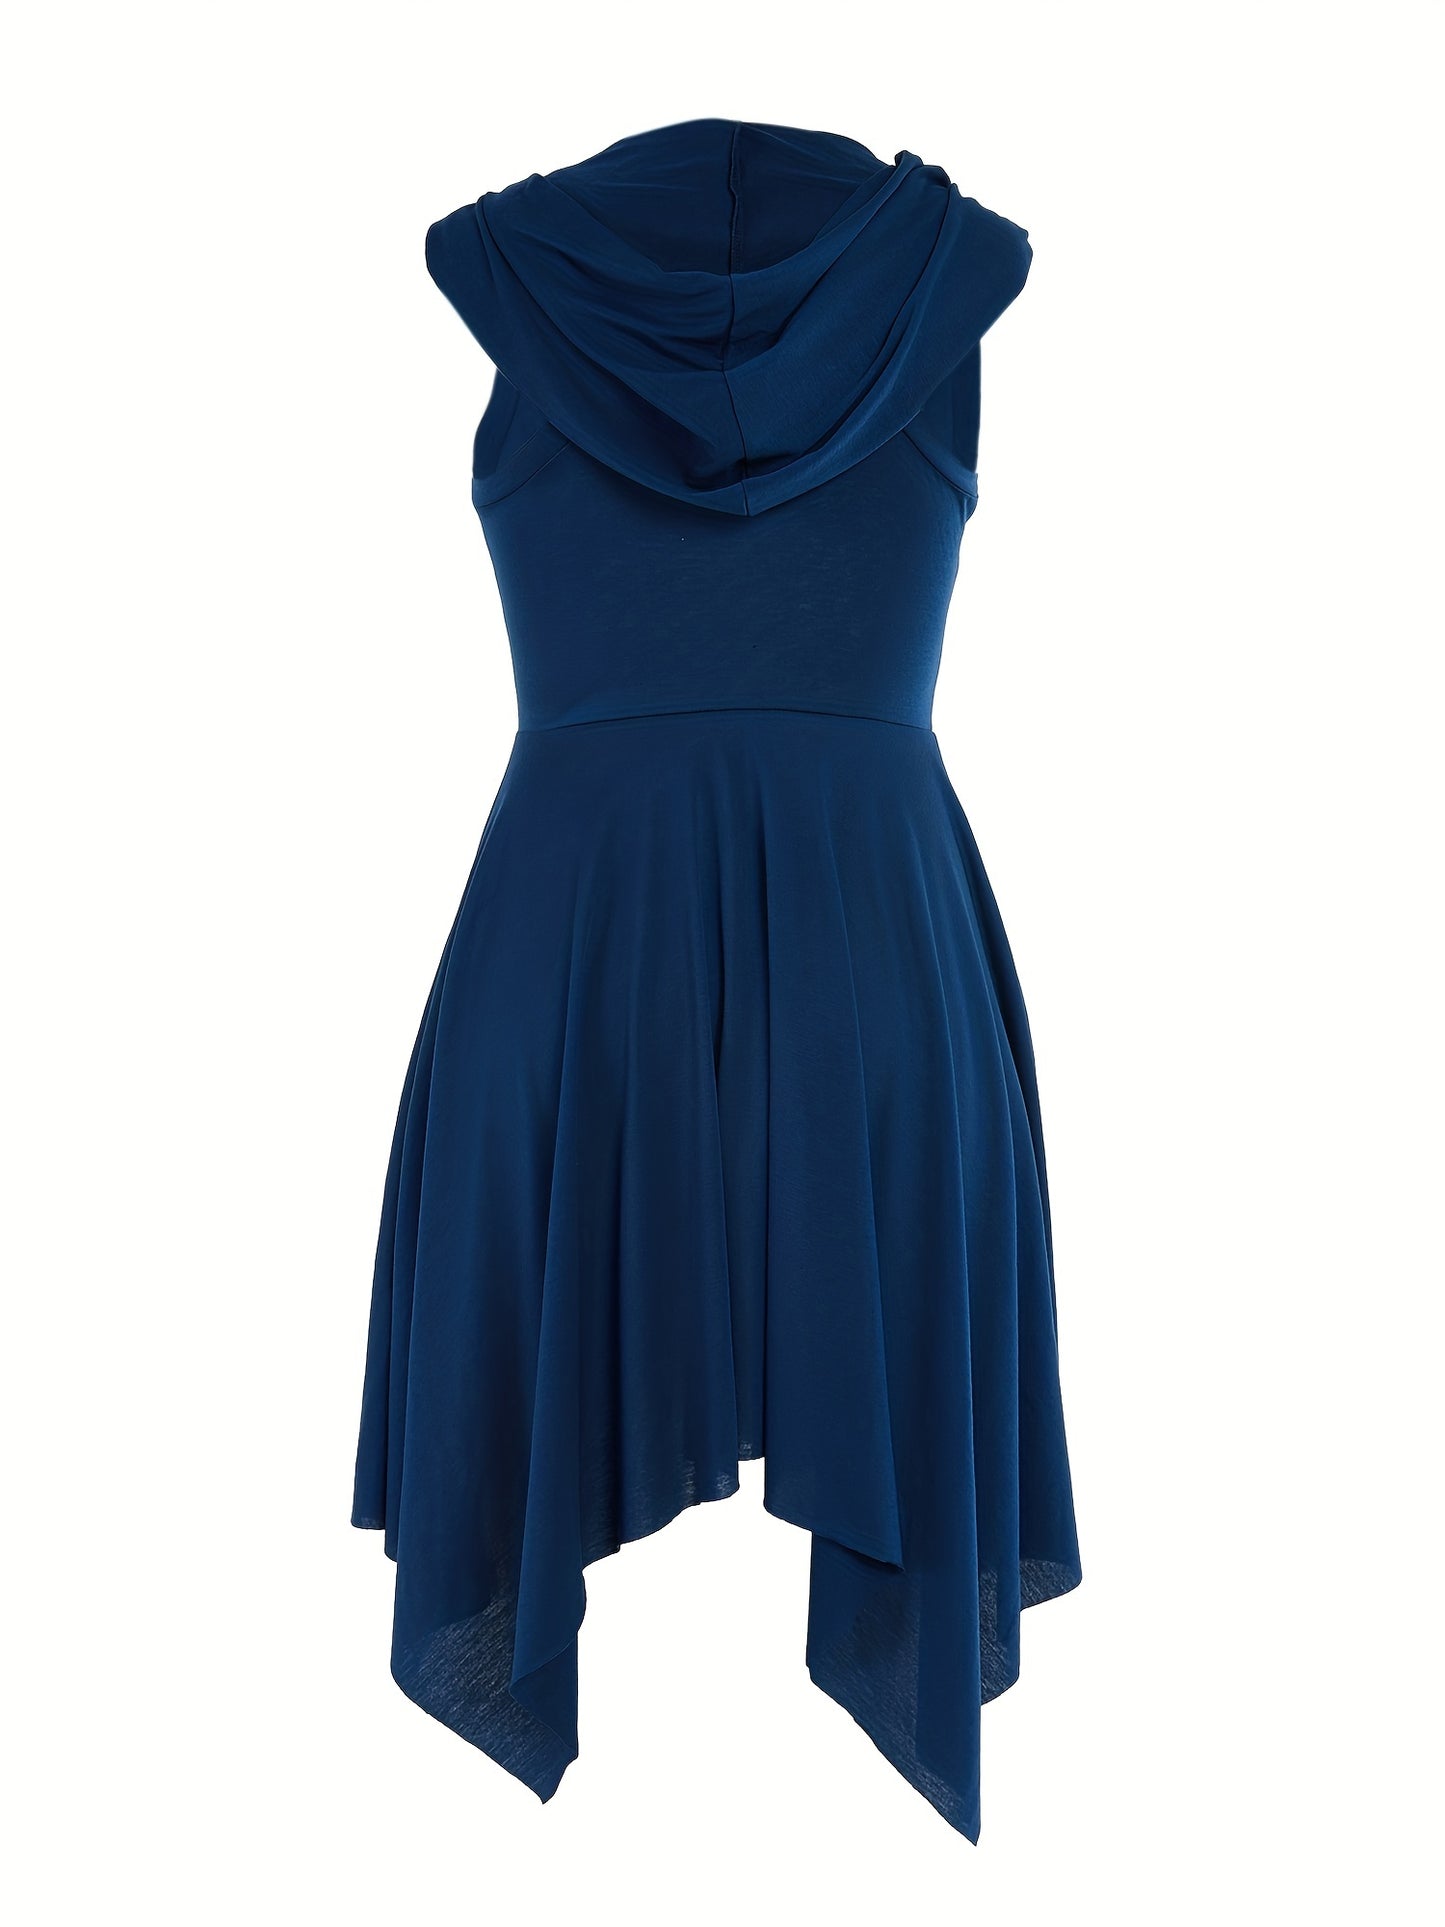 Antmvs Asymmetrical Hem Hooded Dress, Casual Sleeveless Solid Dress, Women's Clothing